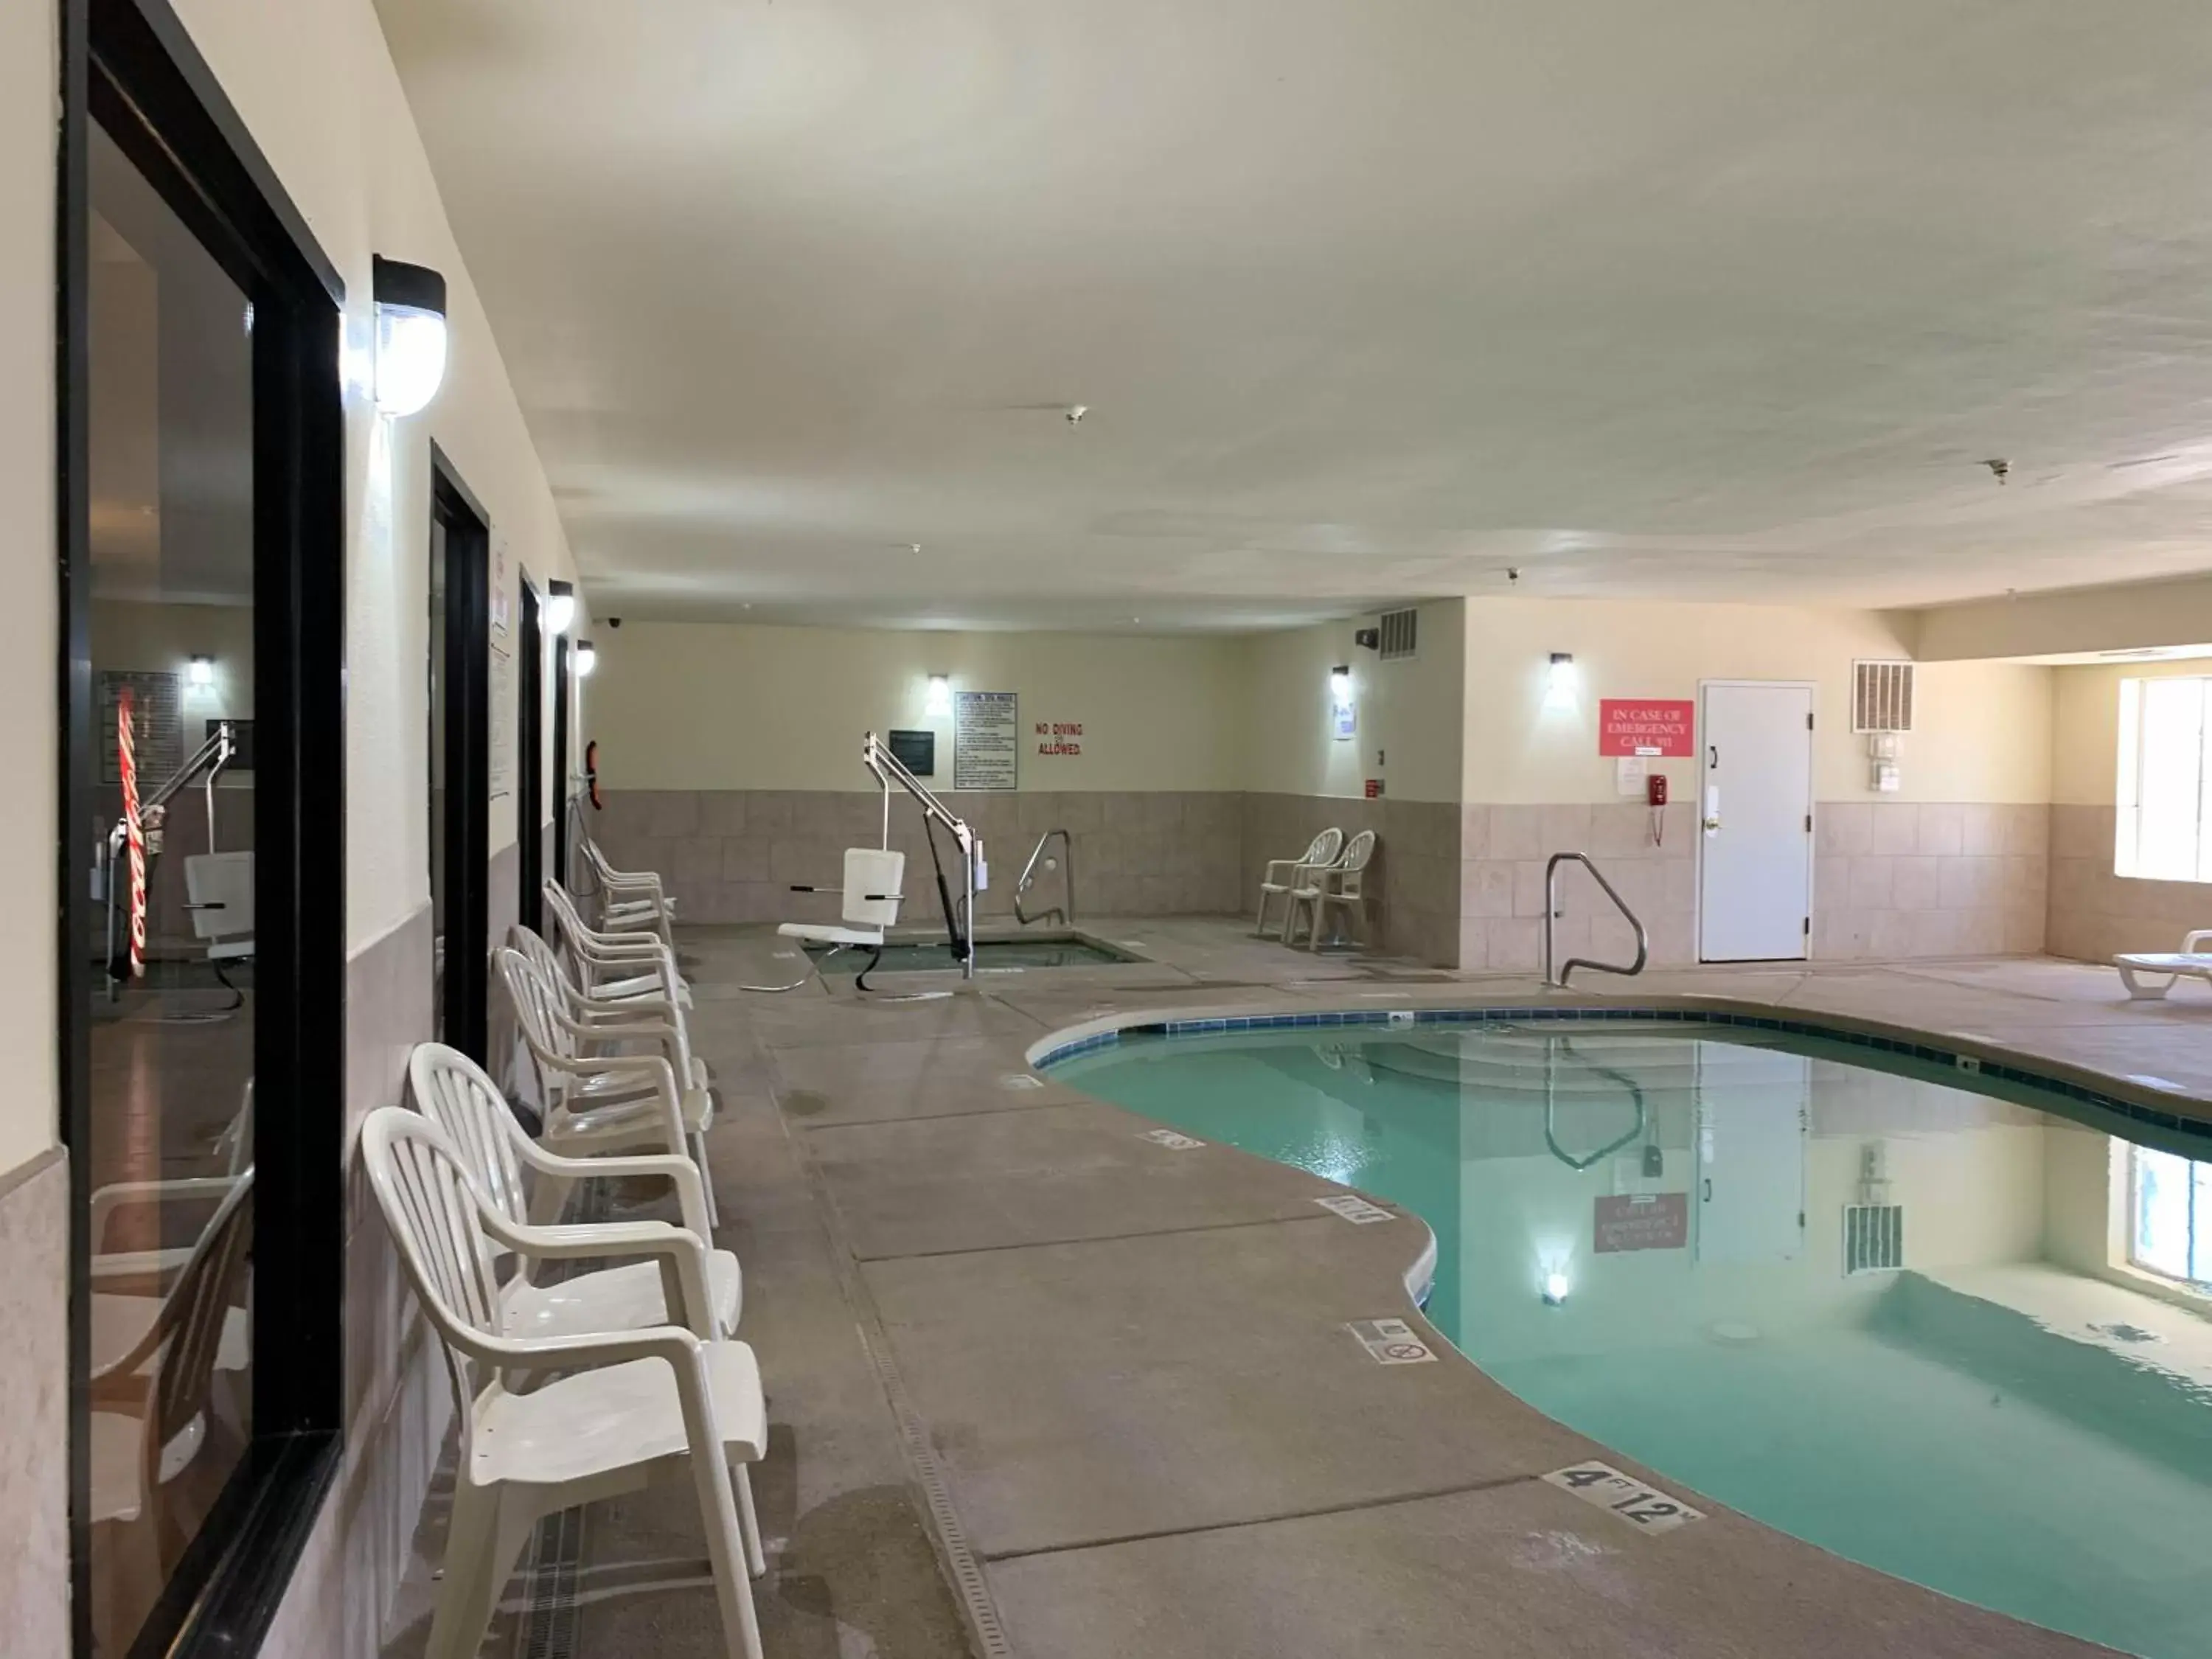 Swimming Pool in Studio 6 Hobbs NM Event Center